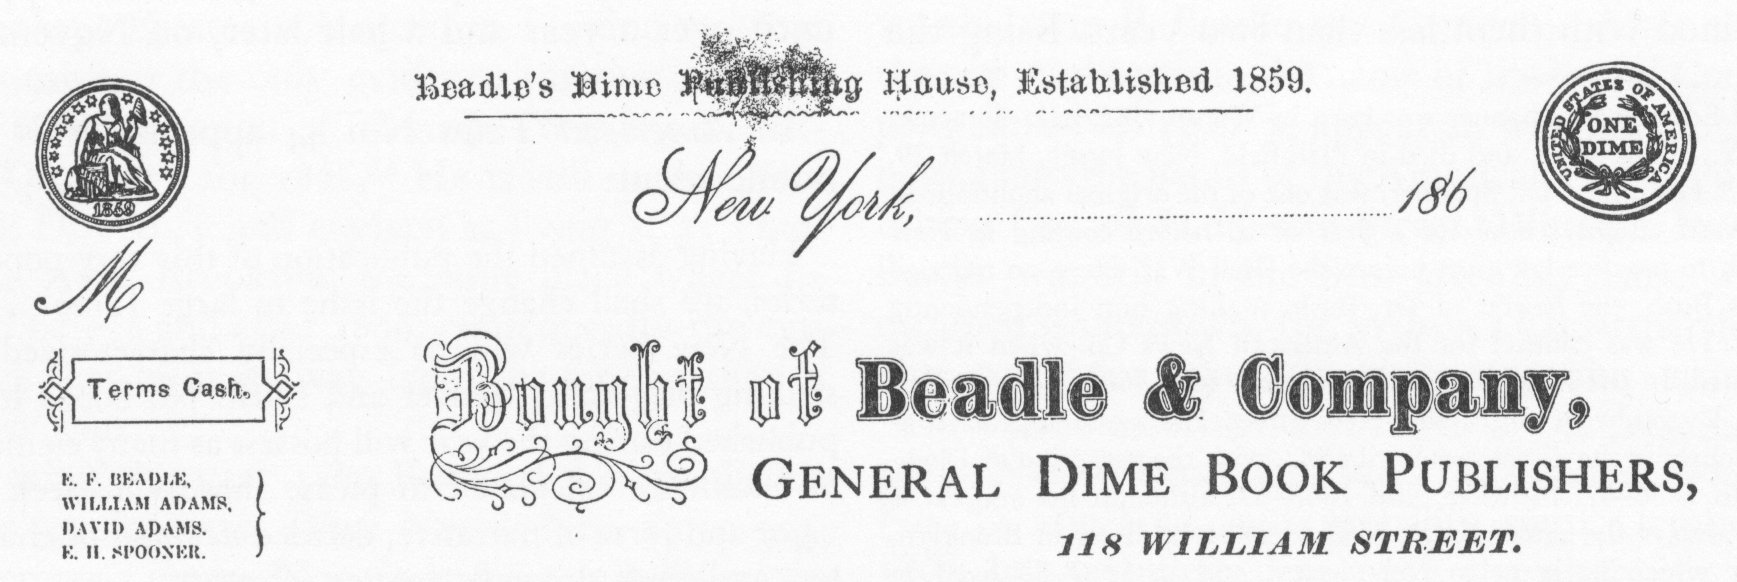 Figure 12.  Beadle &Company's letterhead in 1867